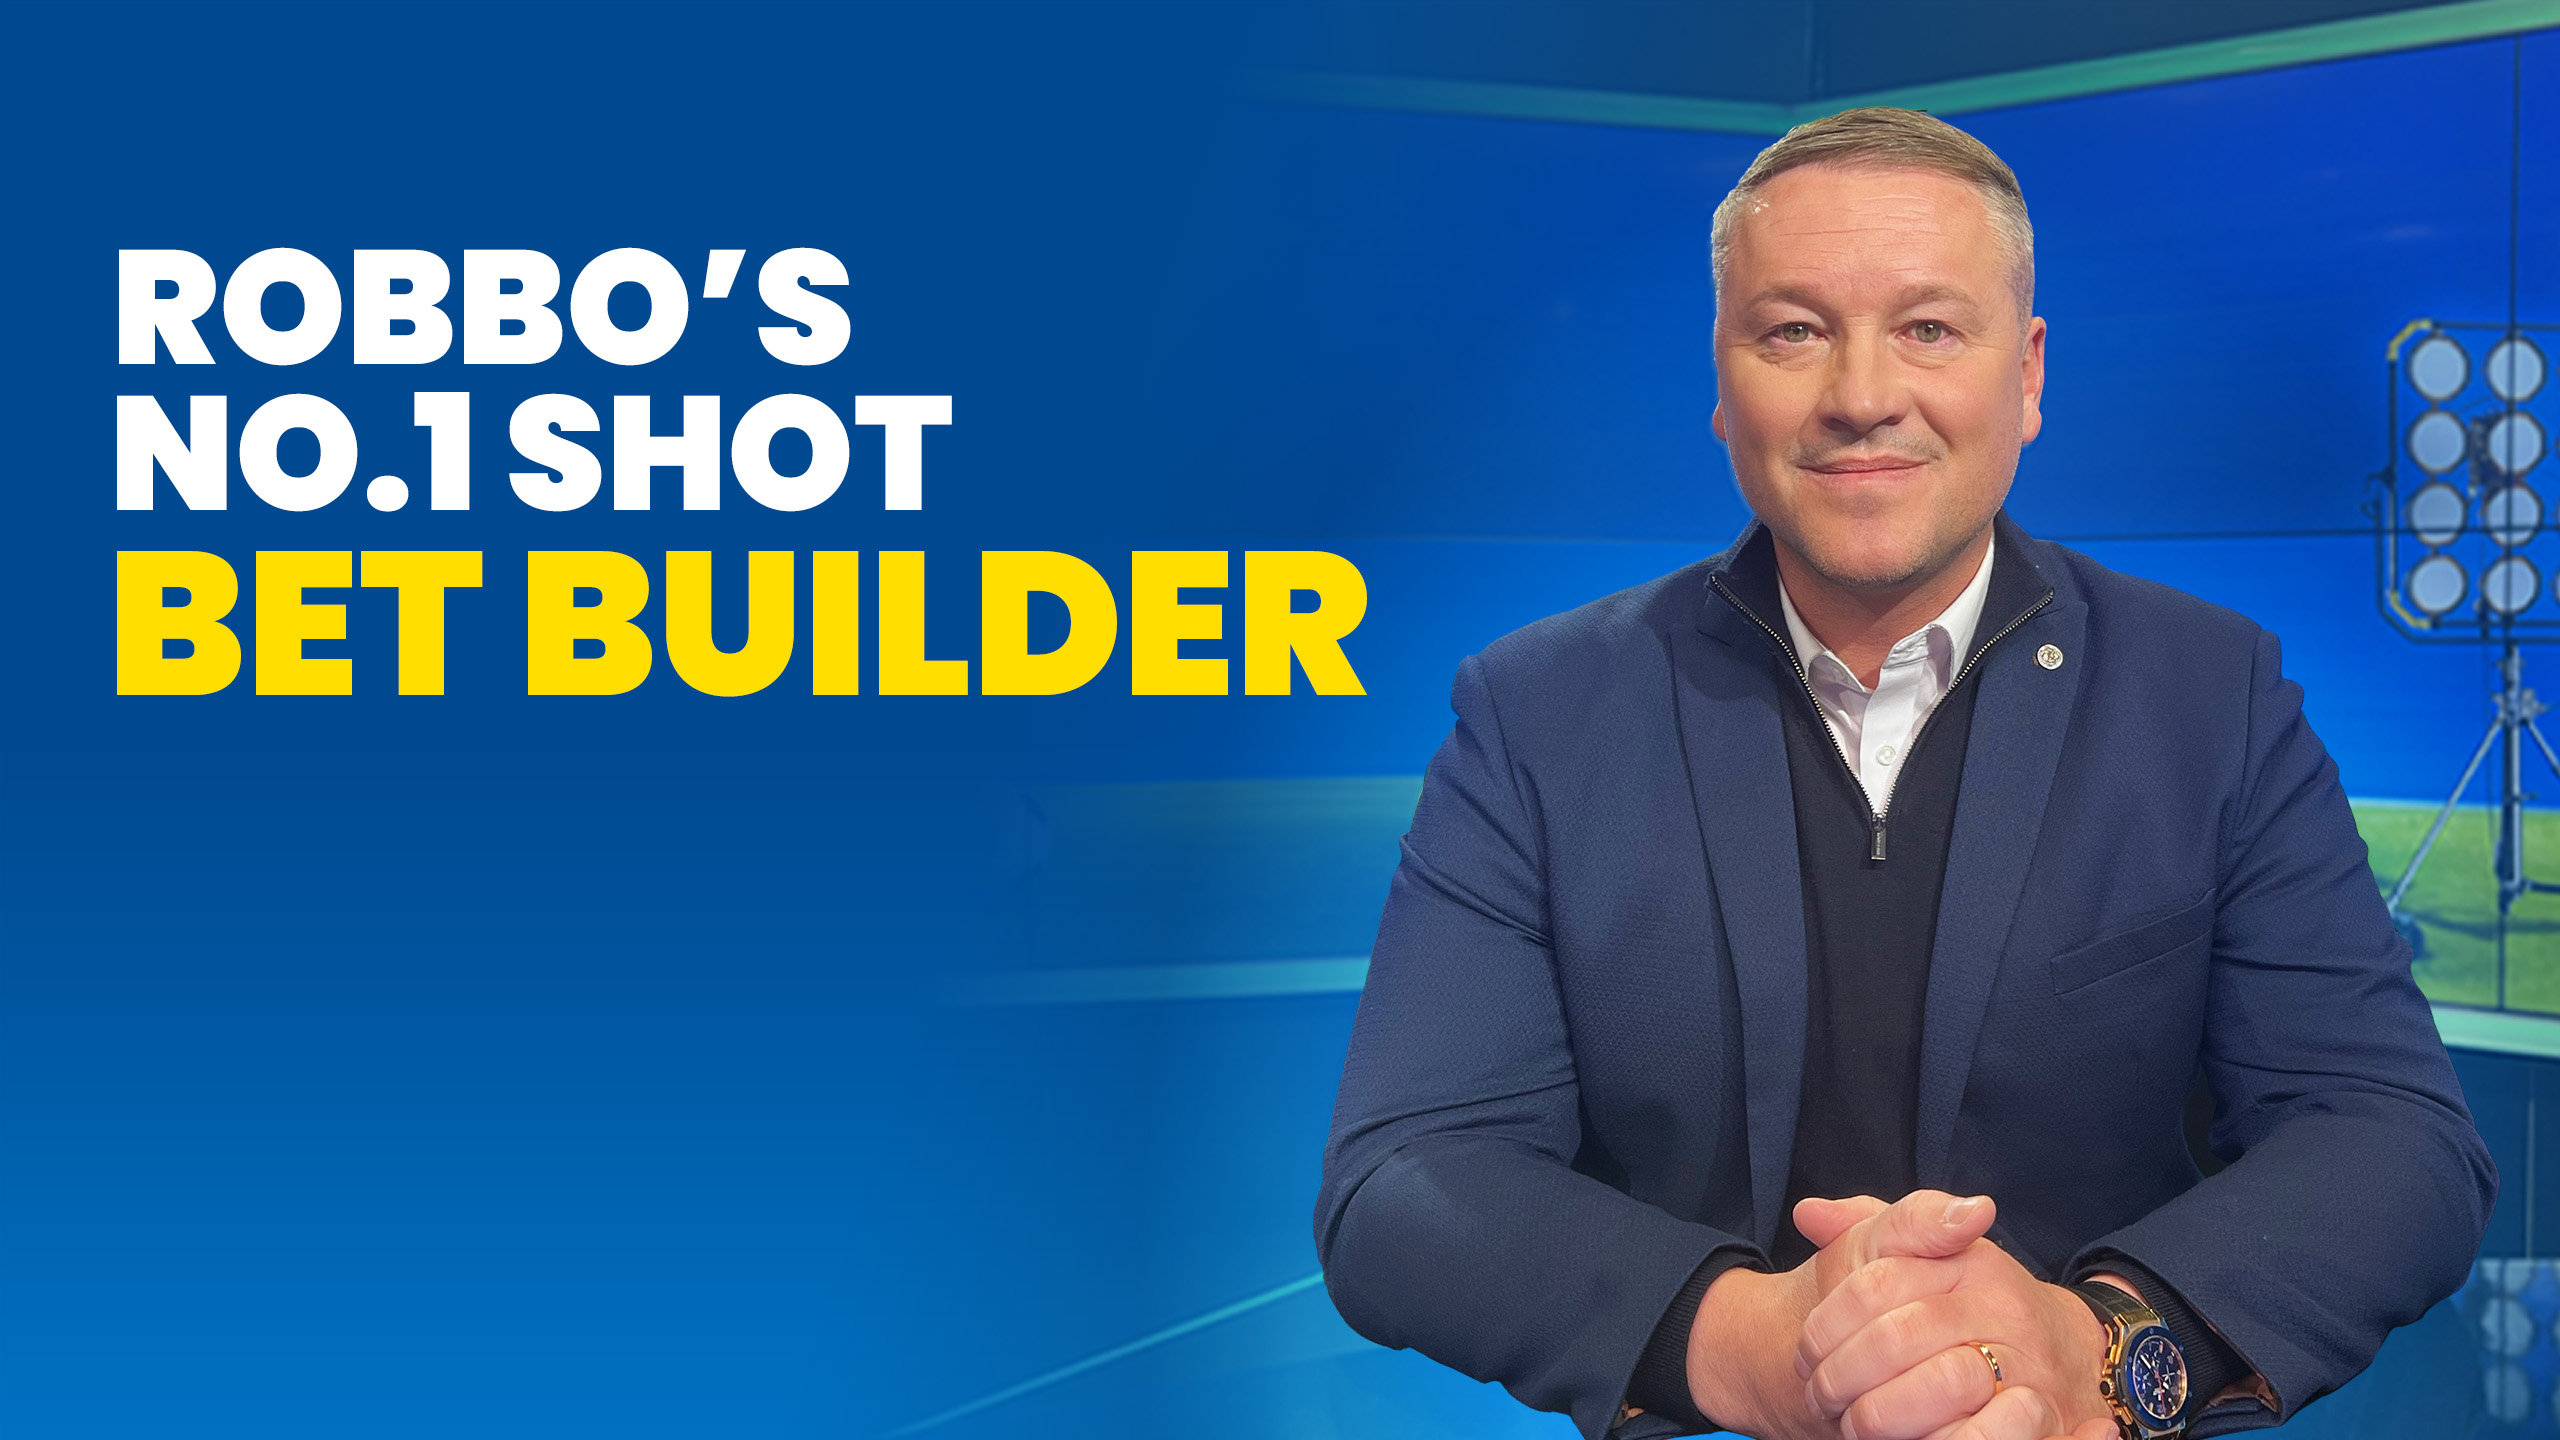 Robbo No.1 Shot Bet Builder